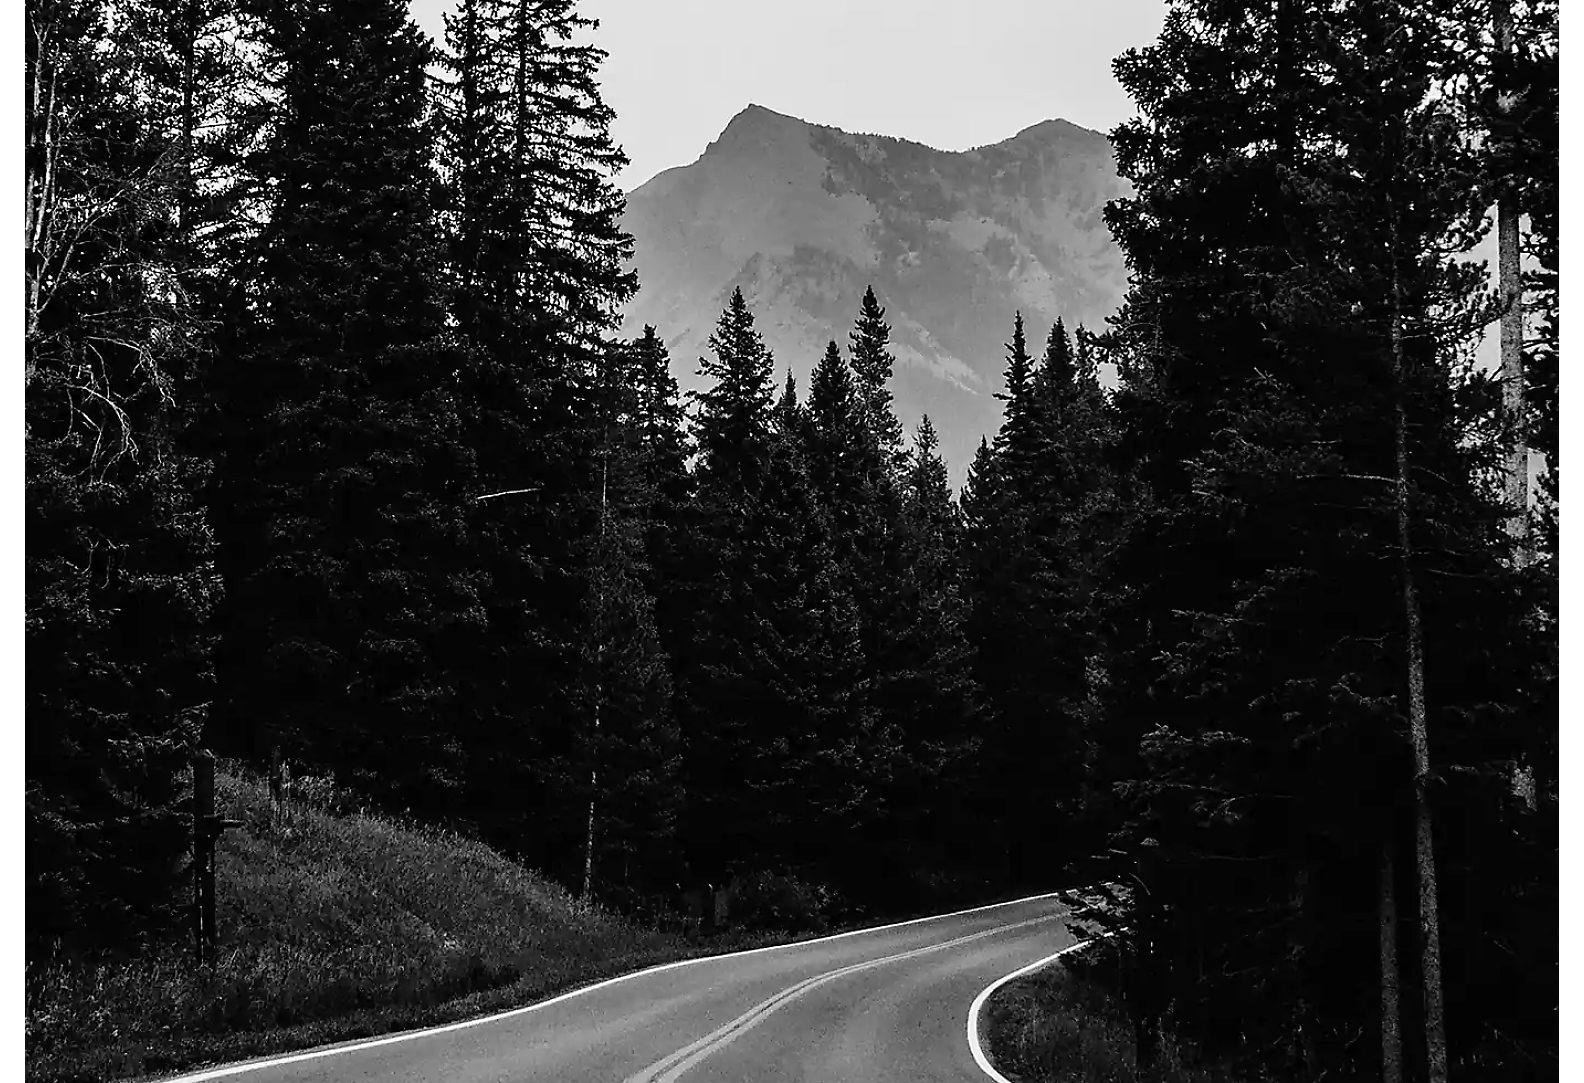 Jalan dua lajur melintas hutan dengan puncak gunung di latar belakang, hitam-putih.